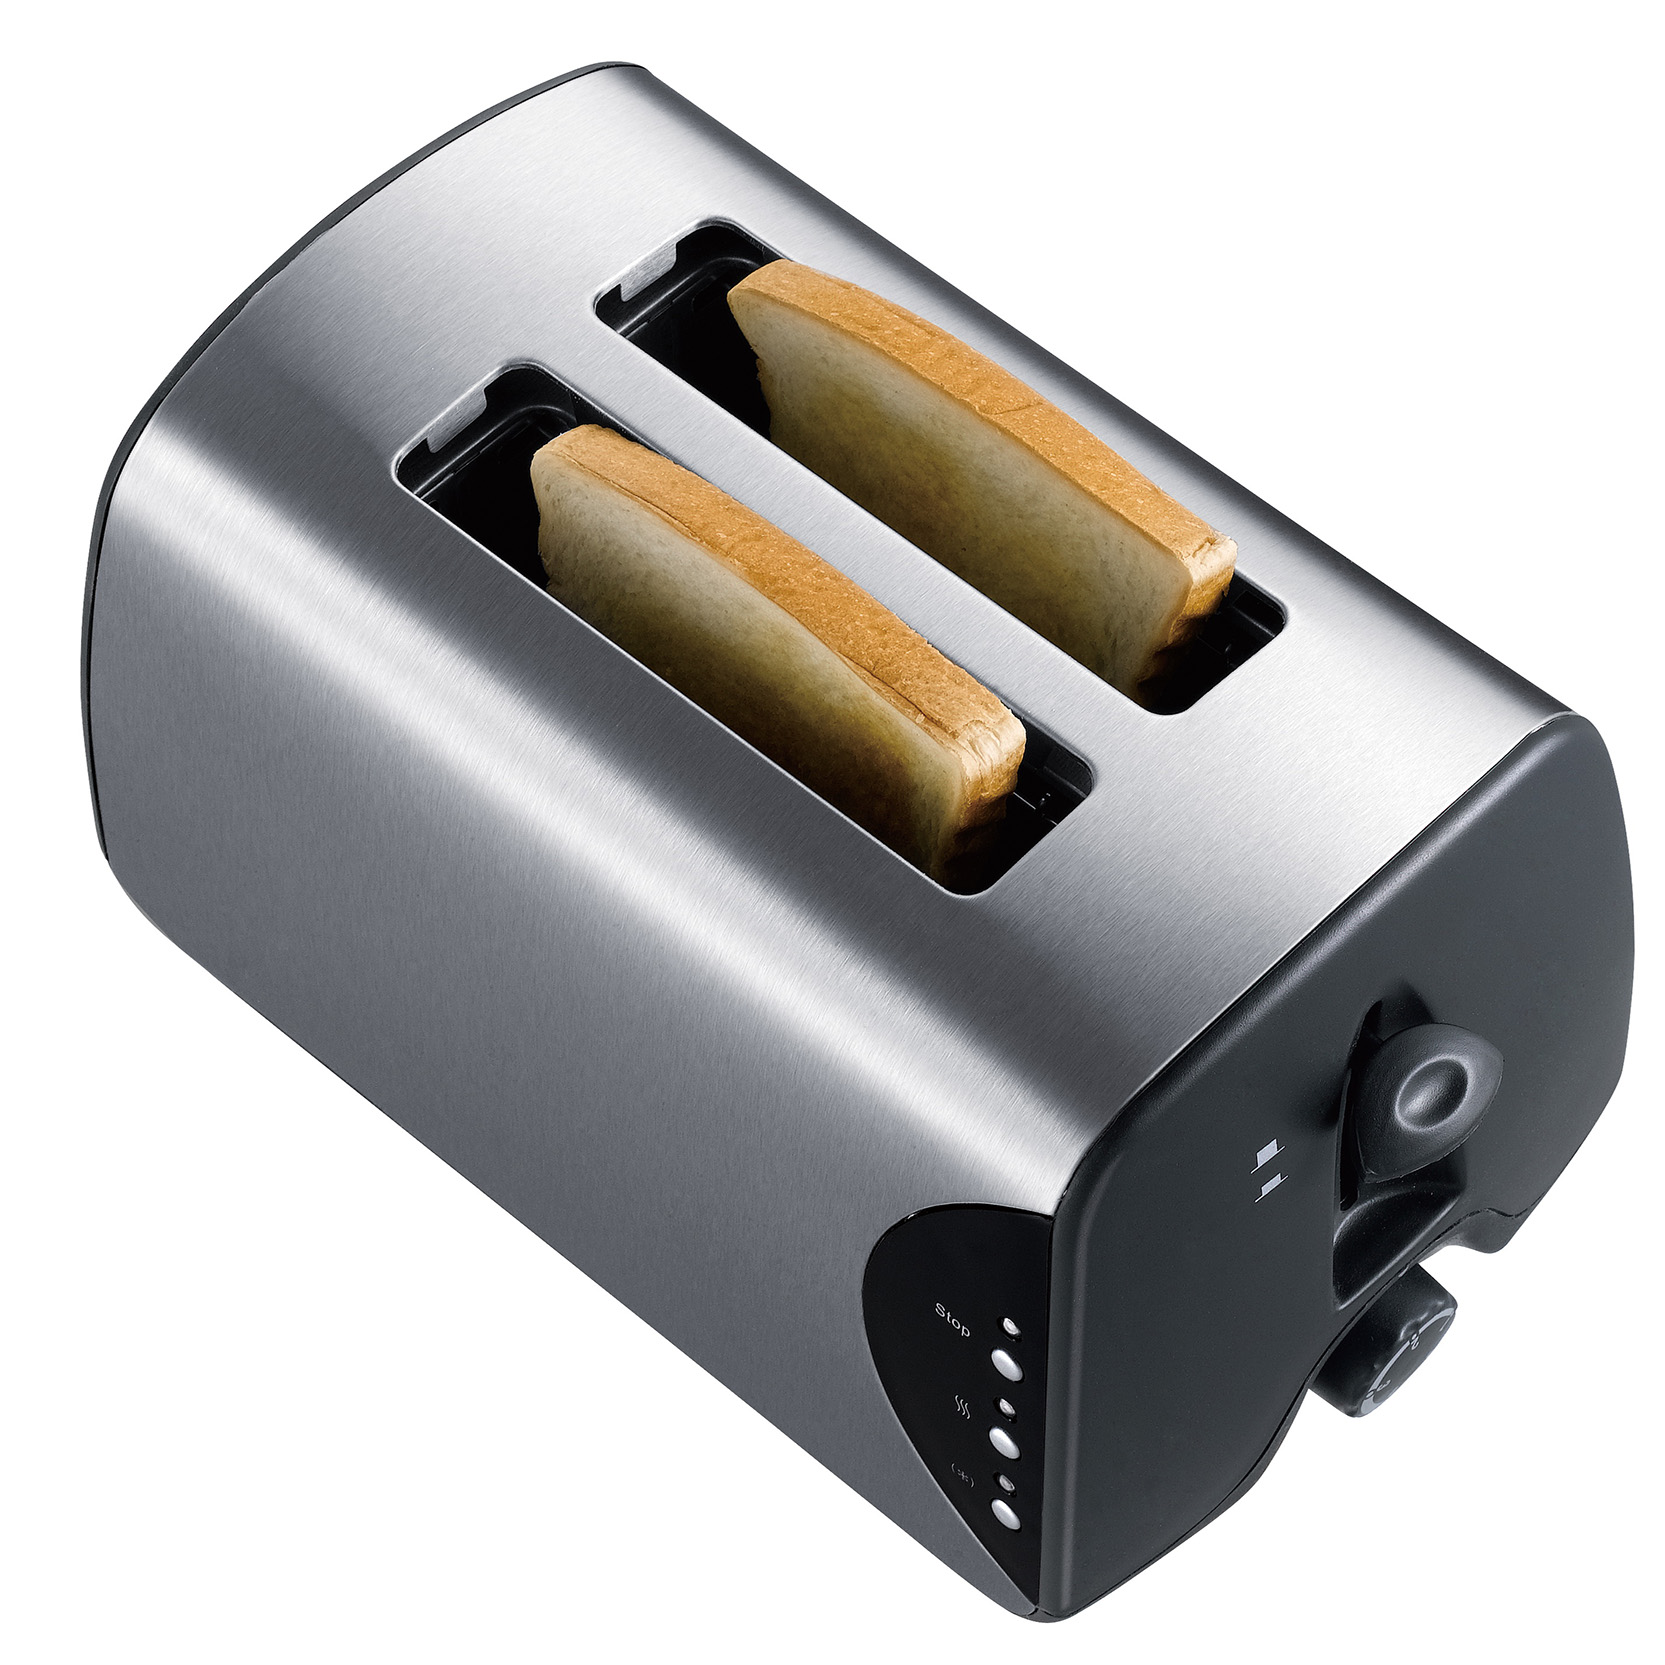 2-slice pop up toaster